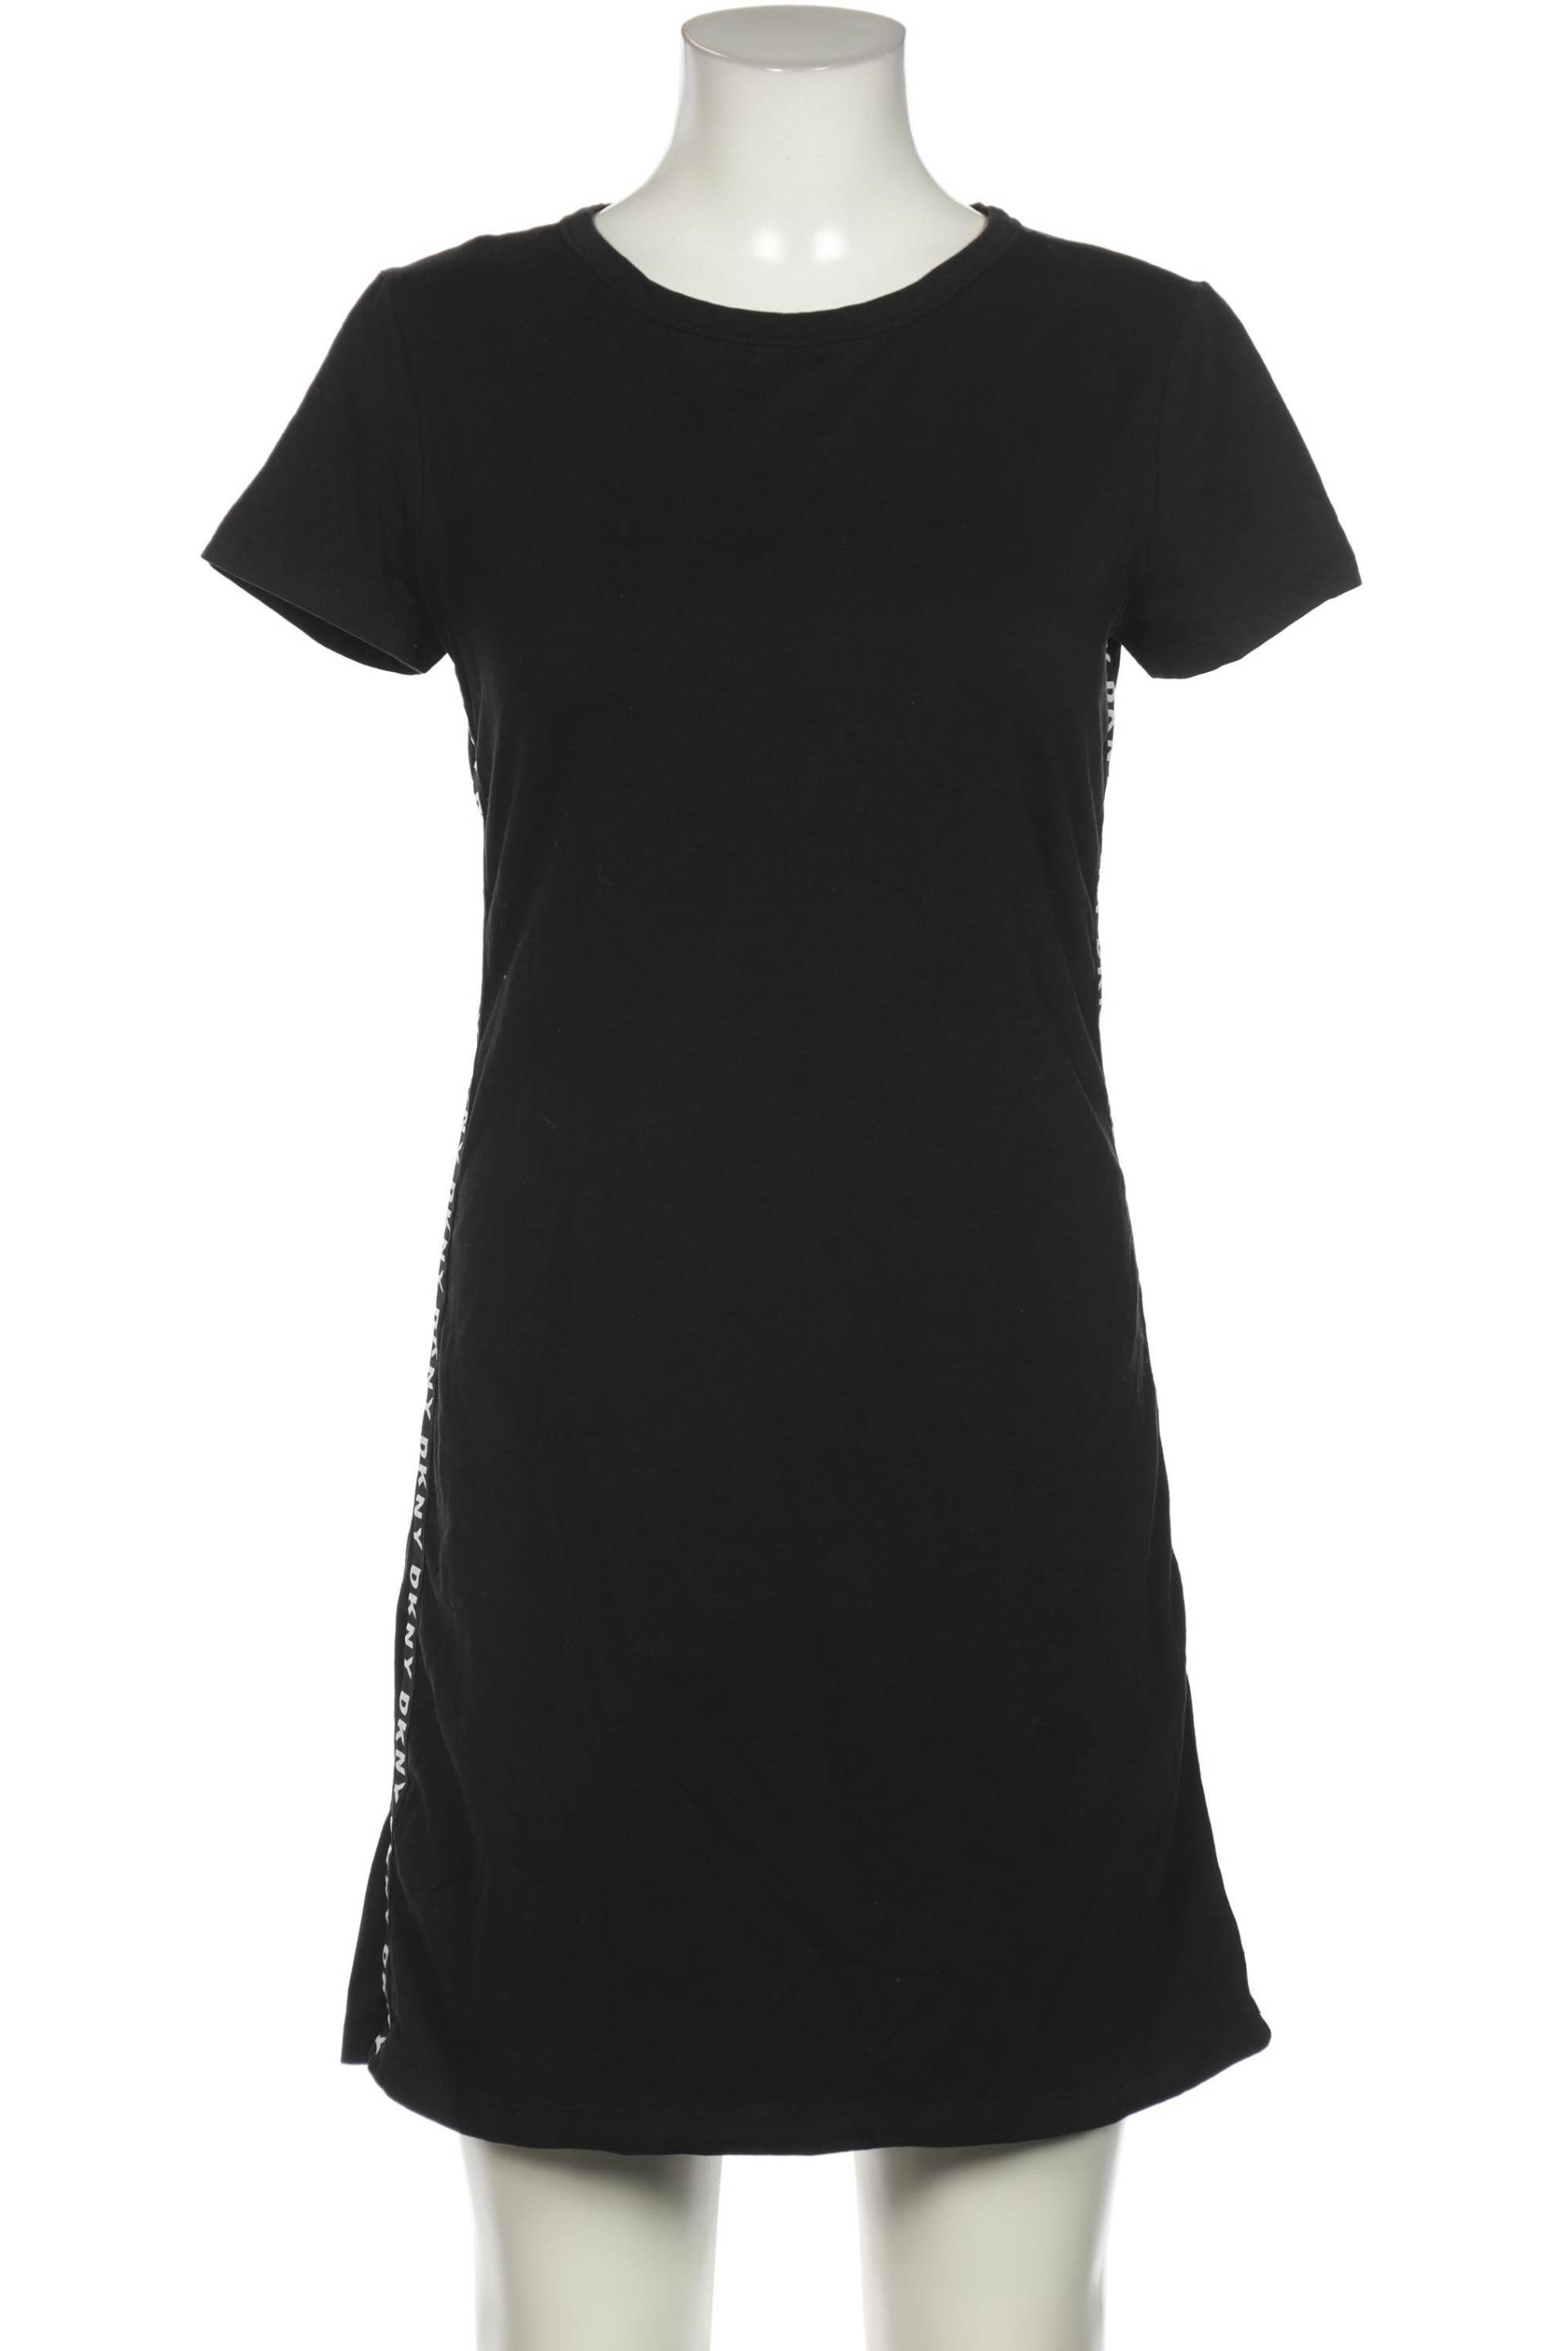 DKNY by Donna Karan New York Damen Kleid, schwarz von DKNY by Donna Karan New York